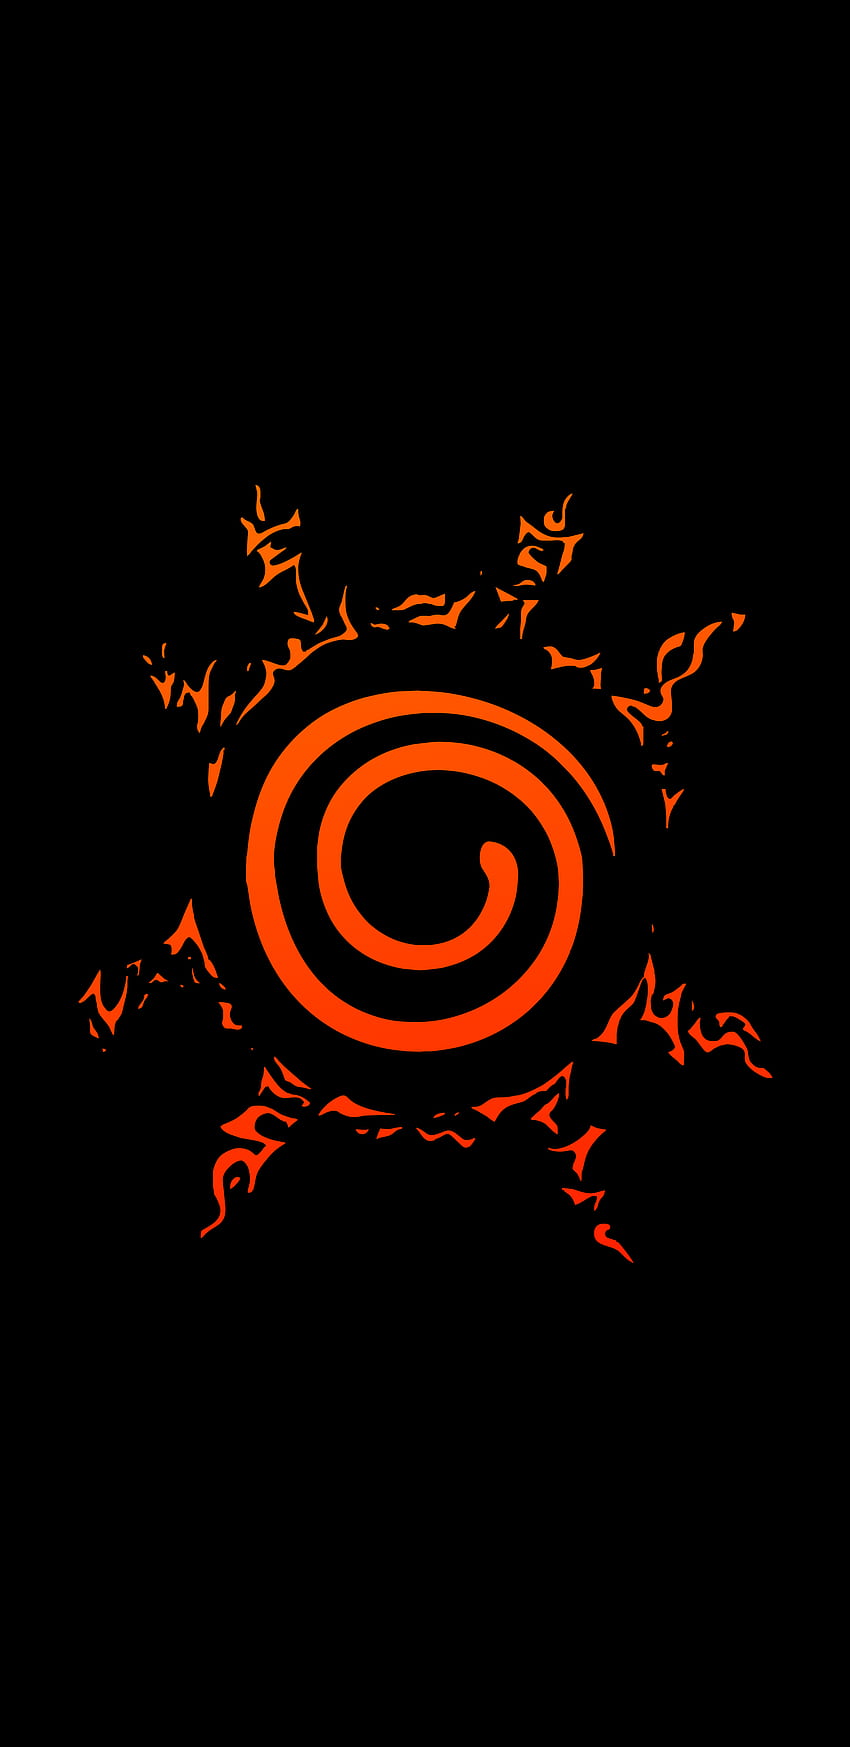 Naruto - Sceau à neuf queues [] : Amoledbackground Fond d'écran de téléphone HD